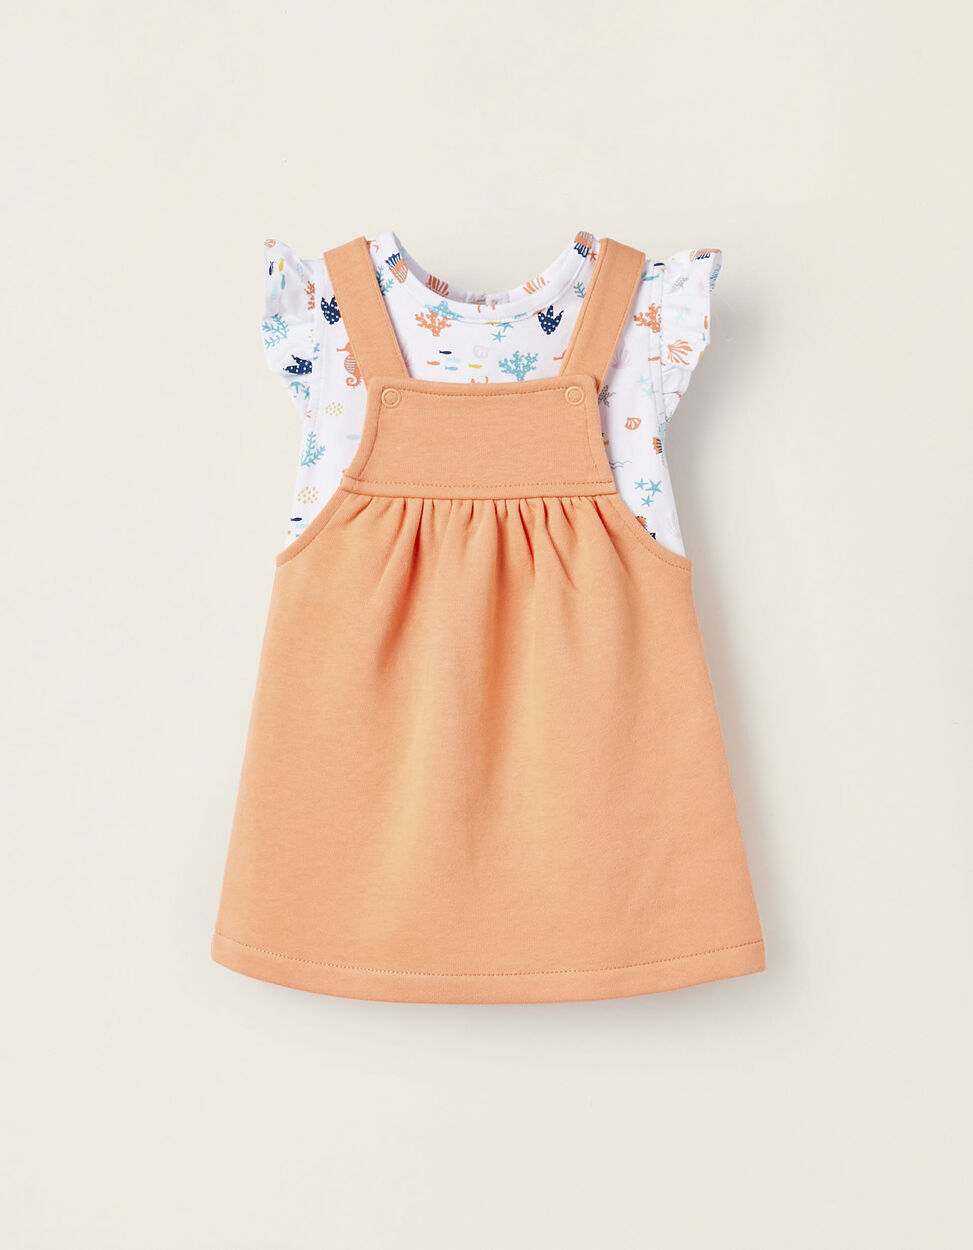 Buy Online Dress + Bodysuit for Newborn Girls 'Coral Reef', Coral